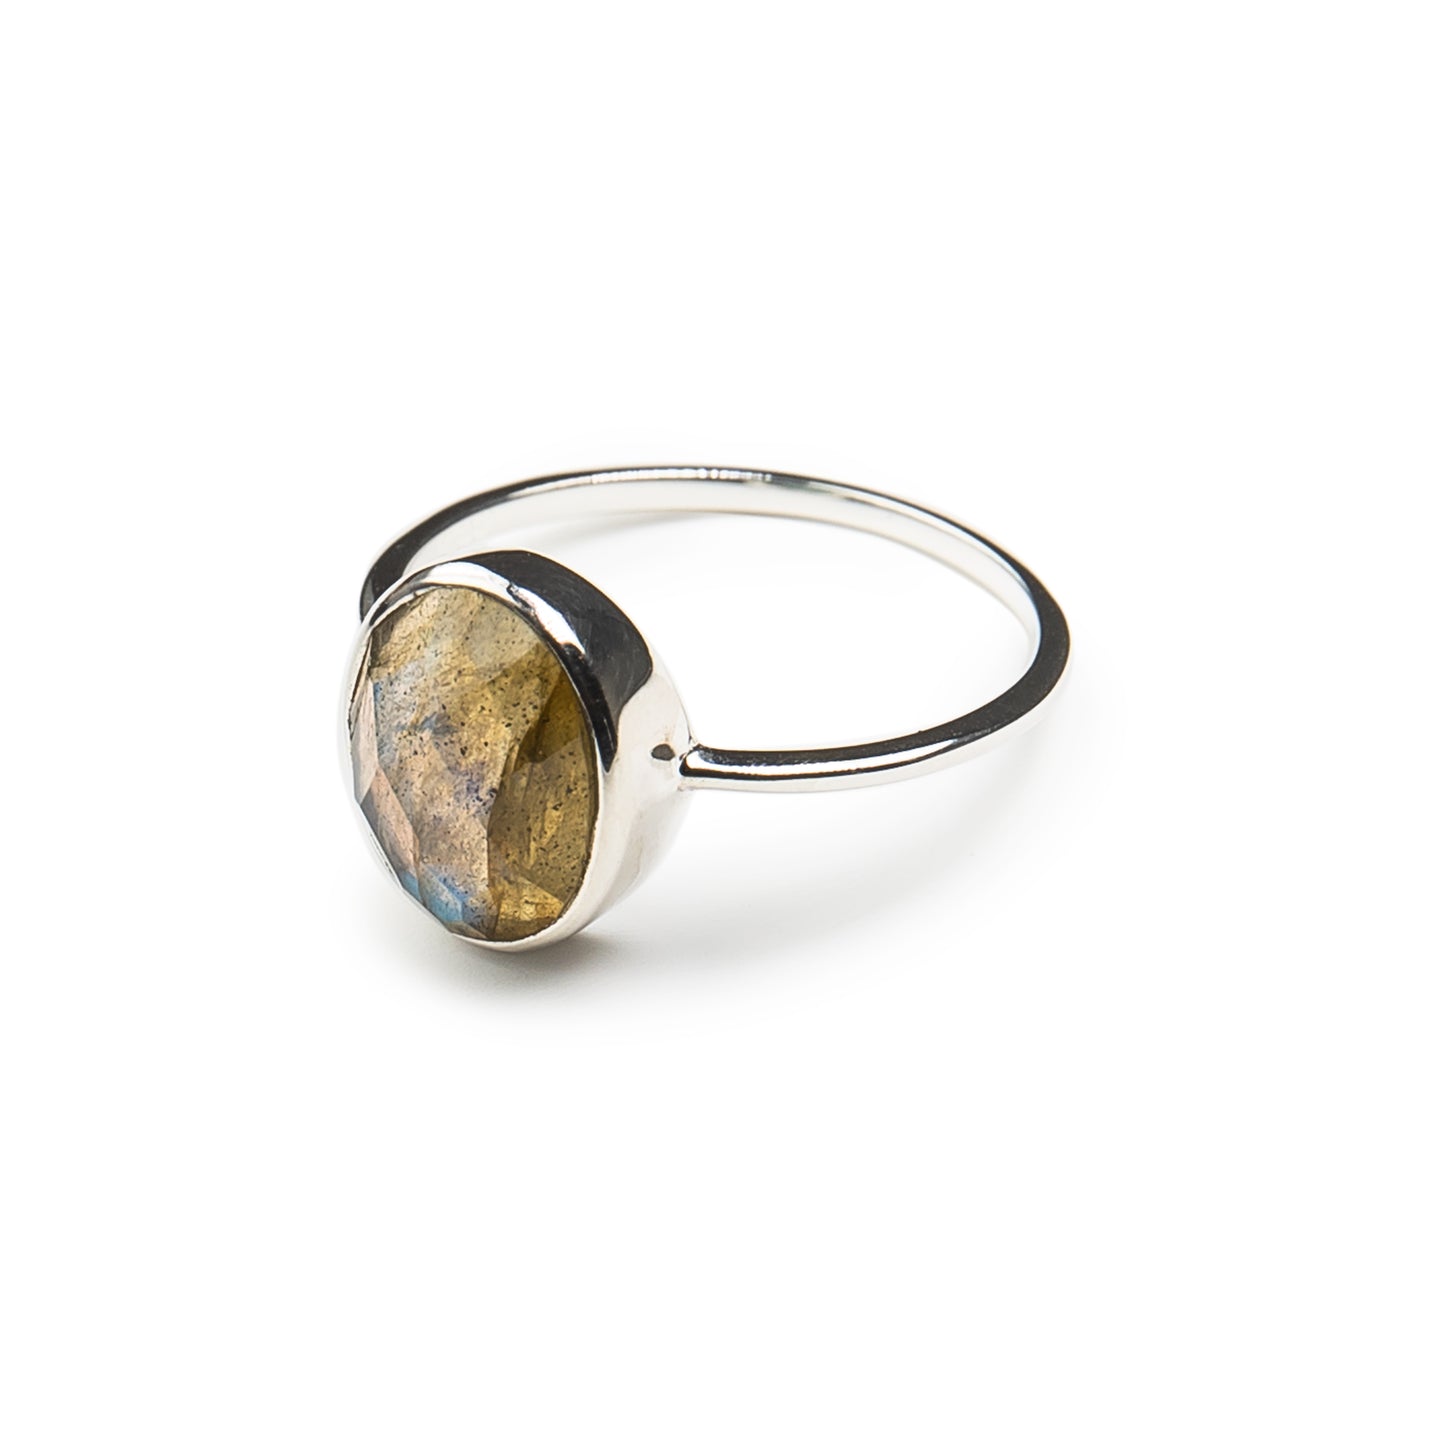 Checkertop Cut Labradorite Ring in Sterling Silver